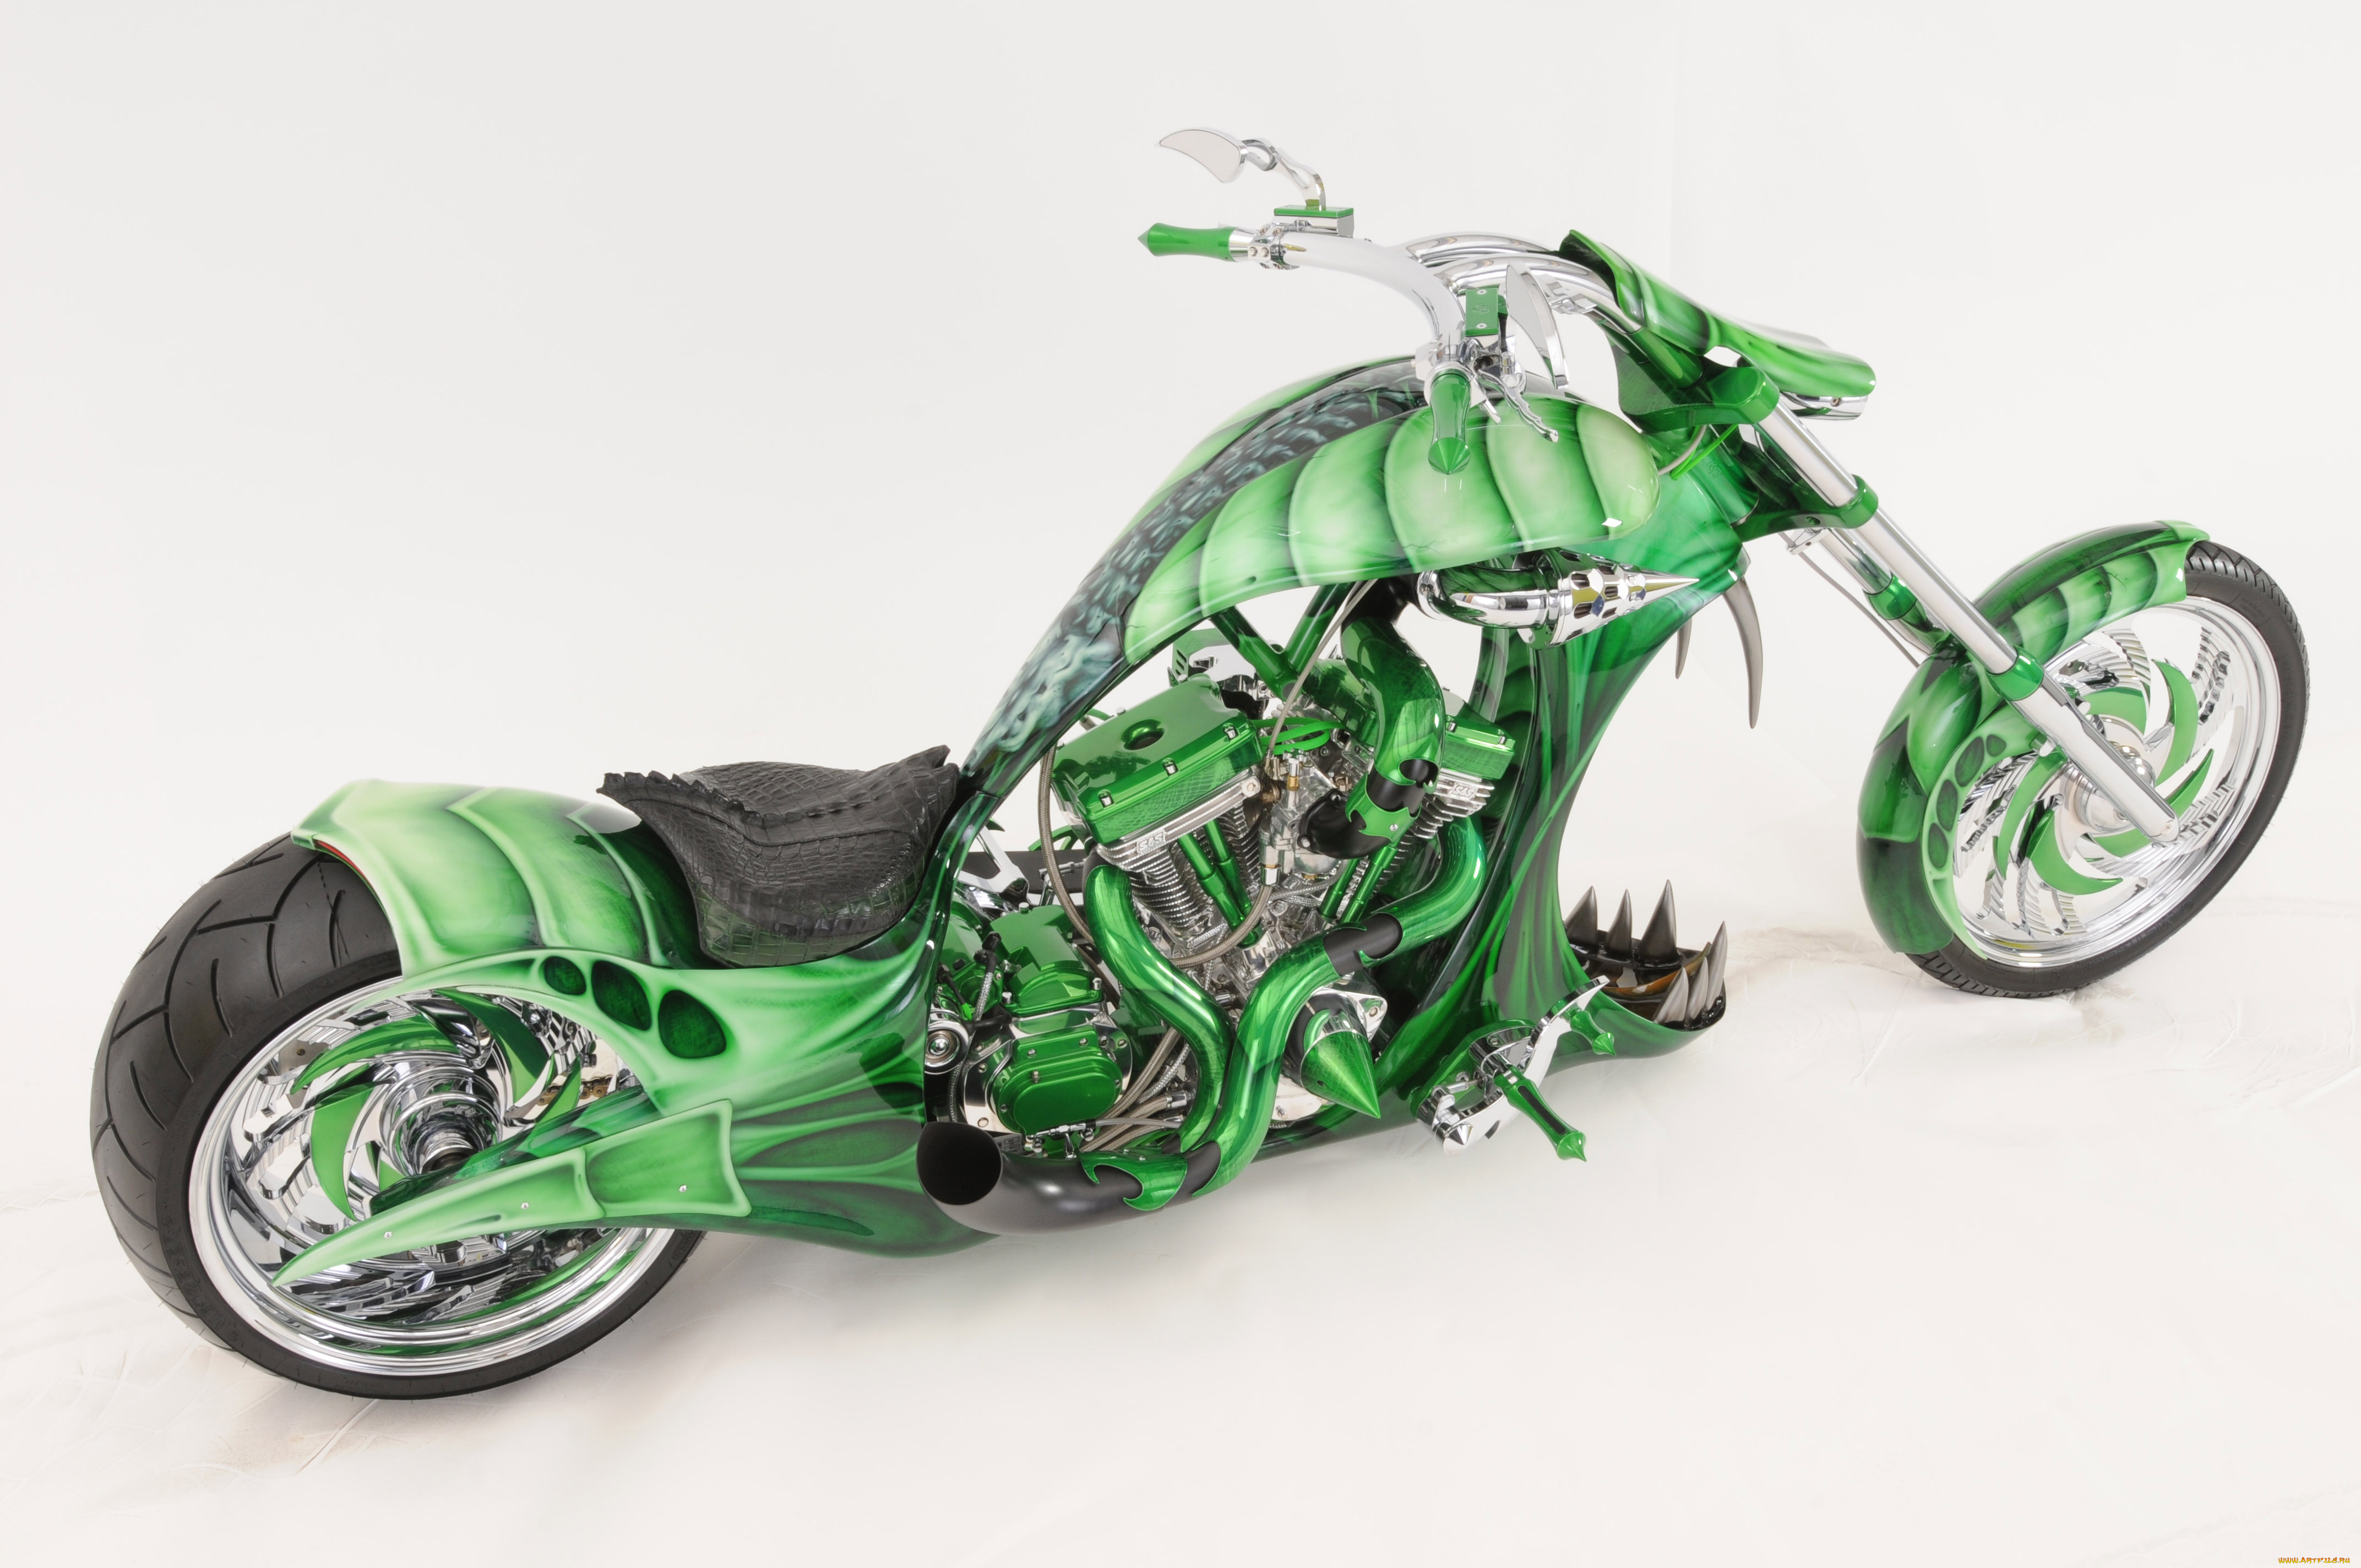 Автомобили байк модельный. Кавасаки зеленый мотоцикл чоппер. Харли Дэвидсон зеленый. Необычные мотоциклы. Крутые байки.